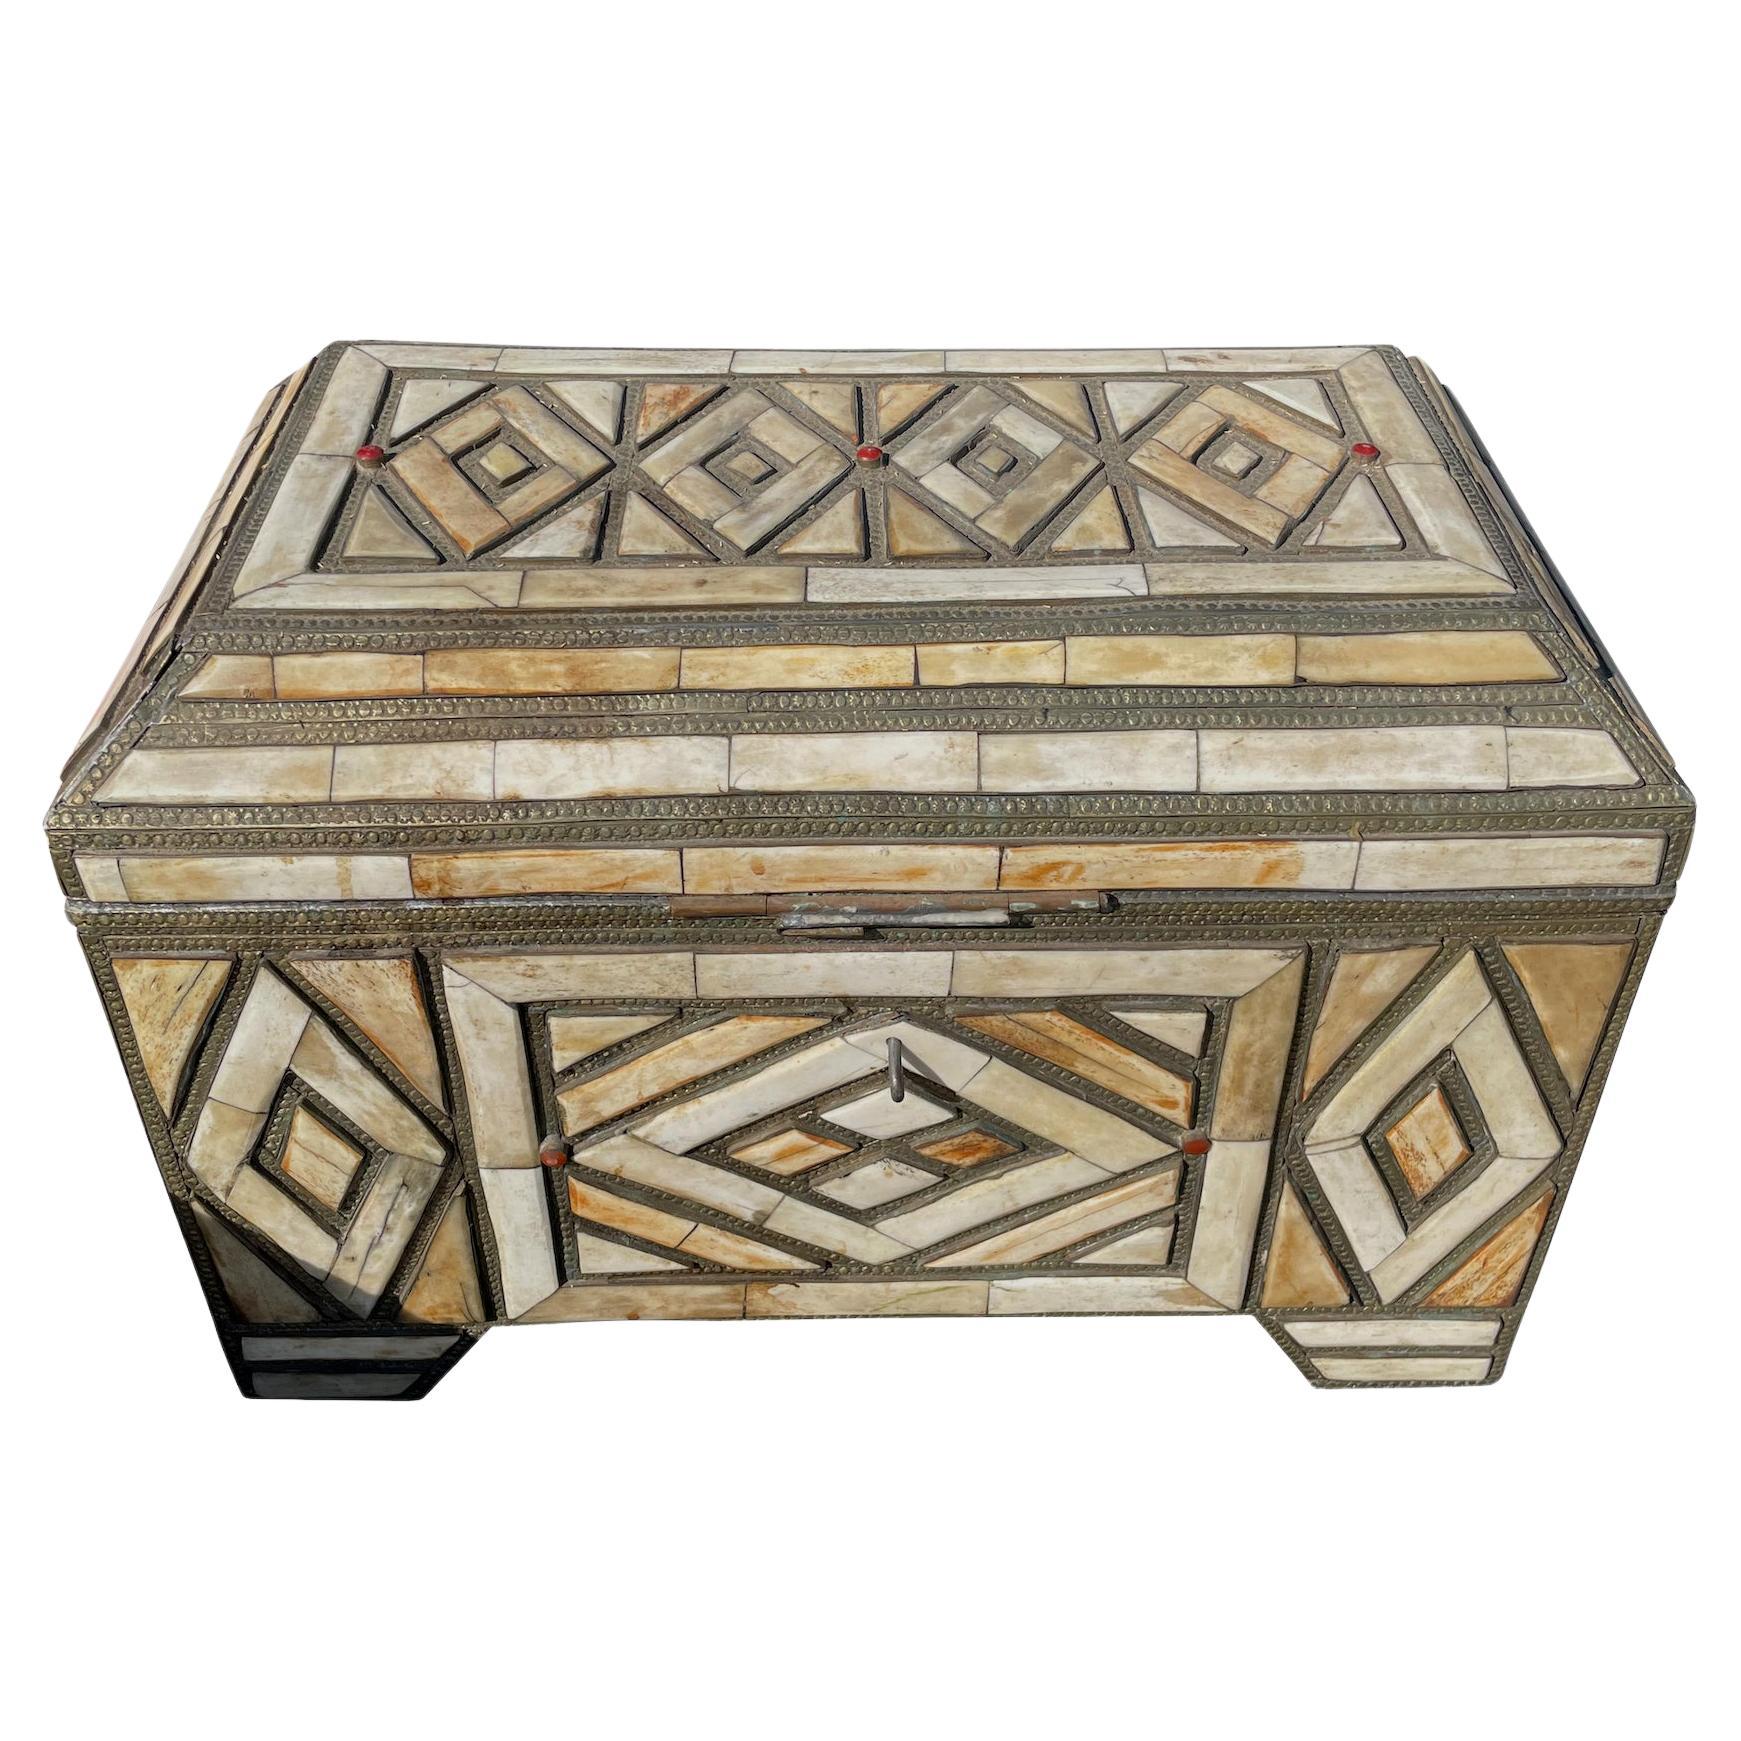 Silver Trimmed Bone Inlay Box, Morocco, 19th Century